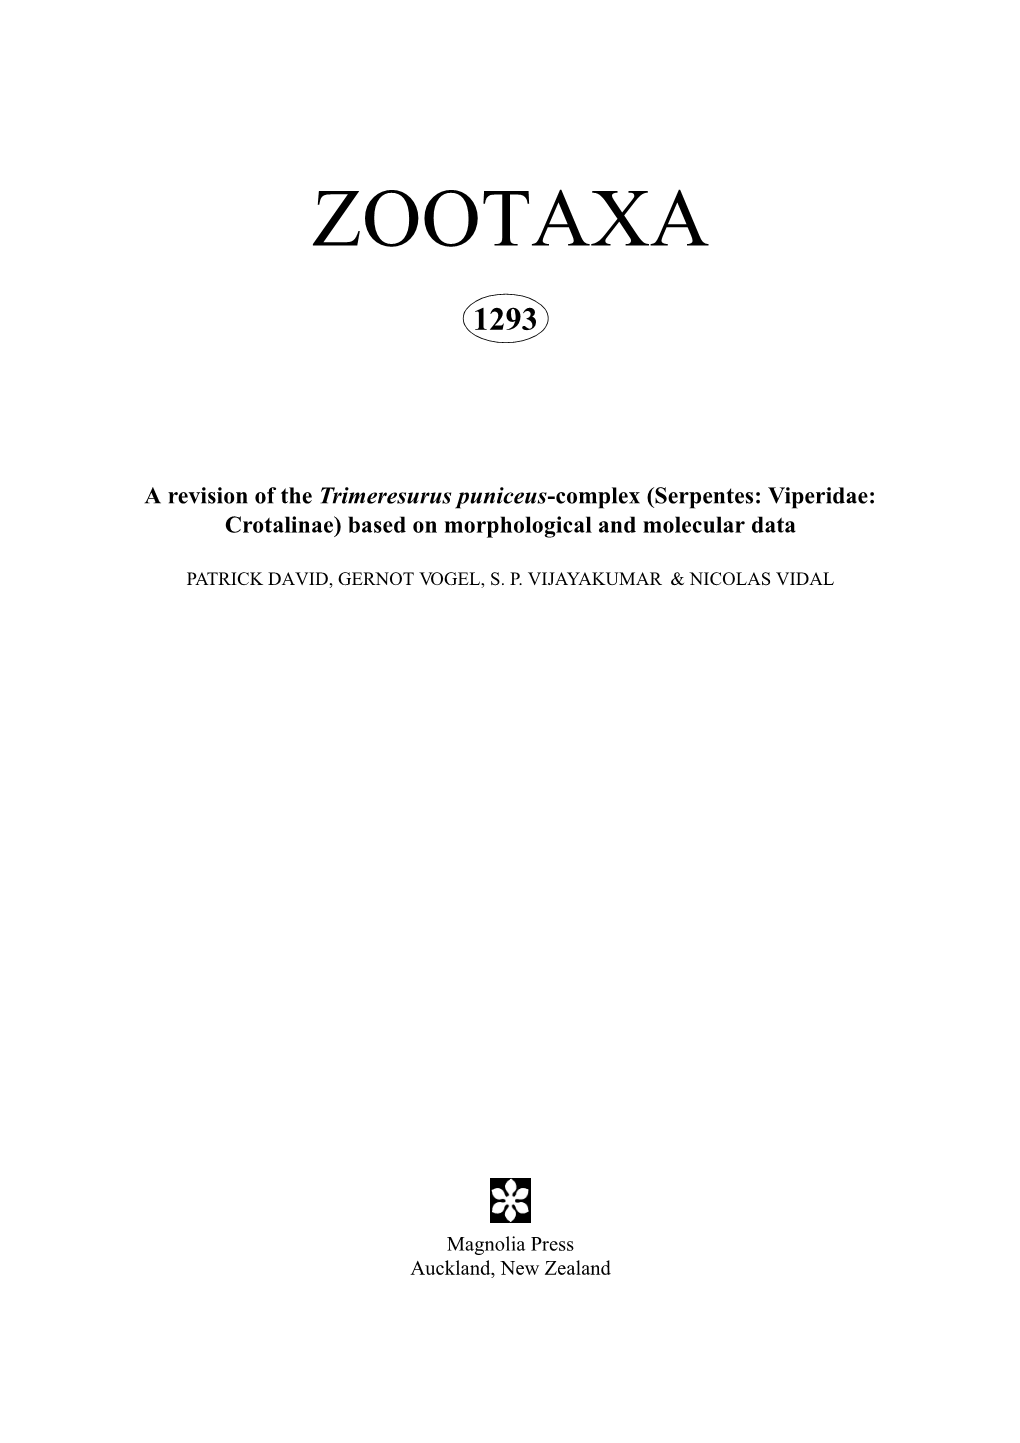 Zootaxa: a Revision of the Trimeresurus